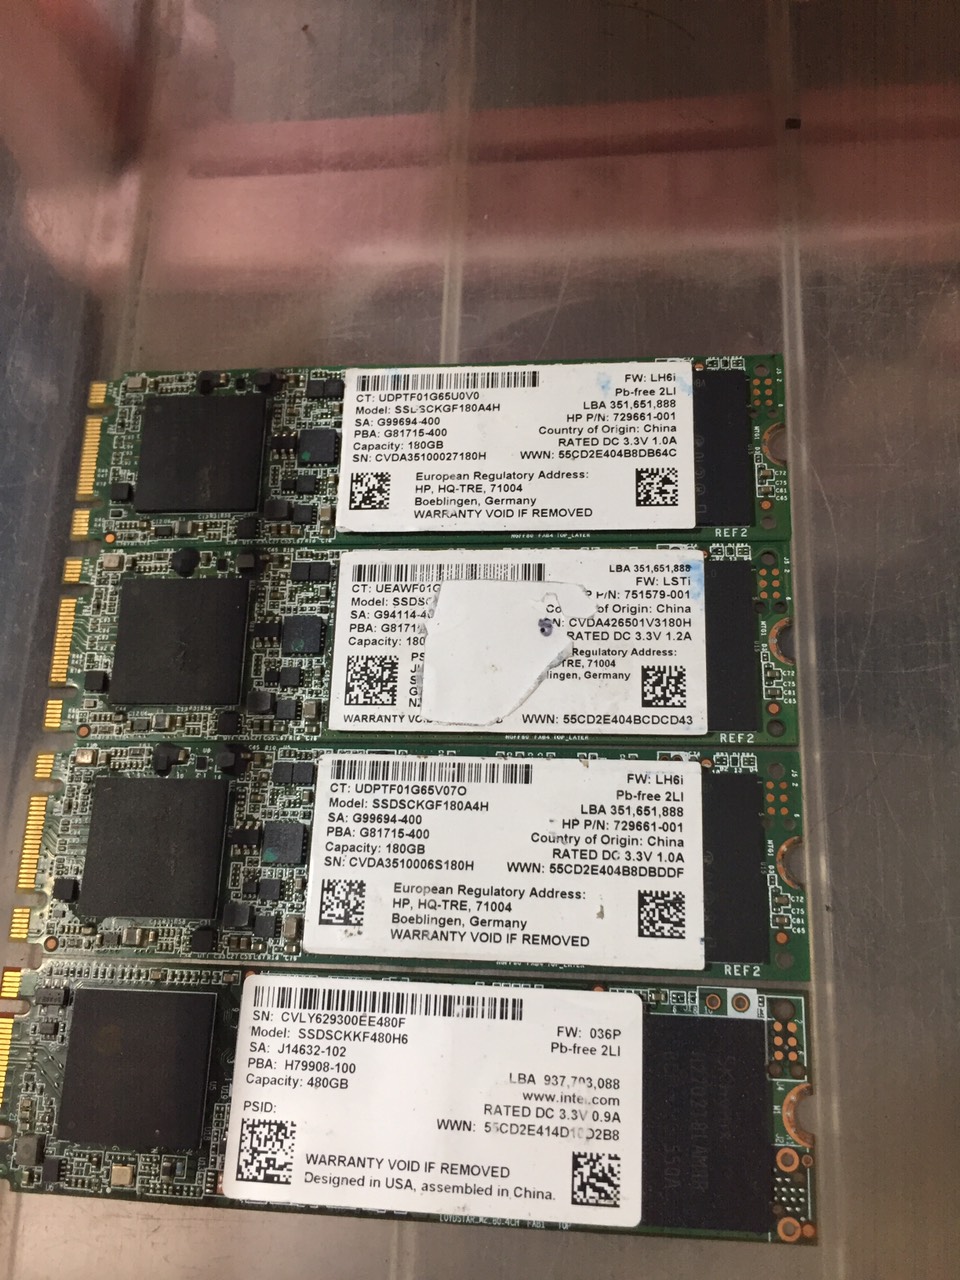 SD Samsung 970 EVO Plus 500GB M2 2280 PCIe NVMe